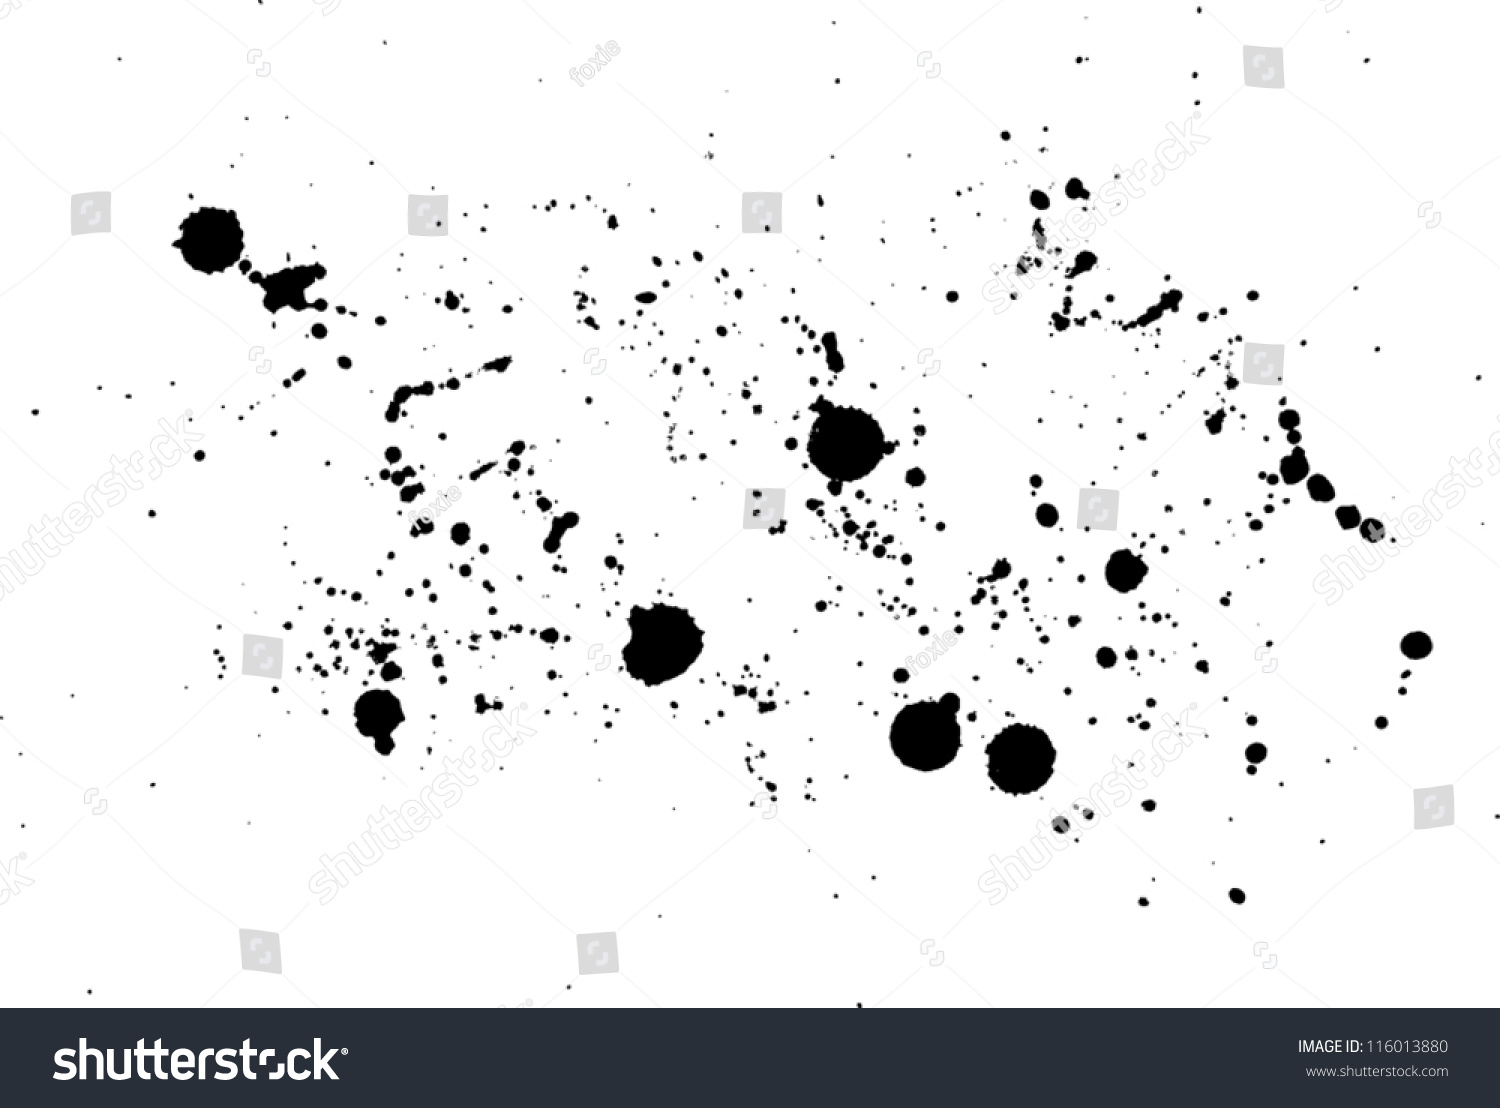 Black Vector Paint Drops Splatter - 116013880 : Shutterstock